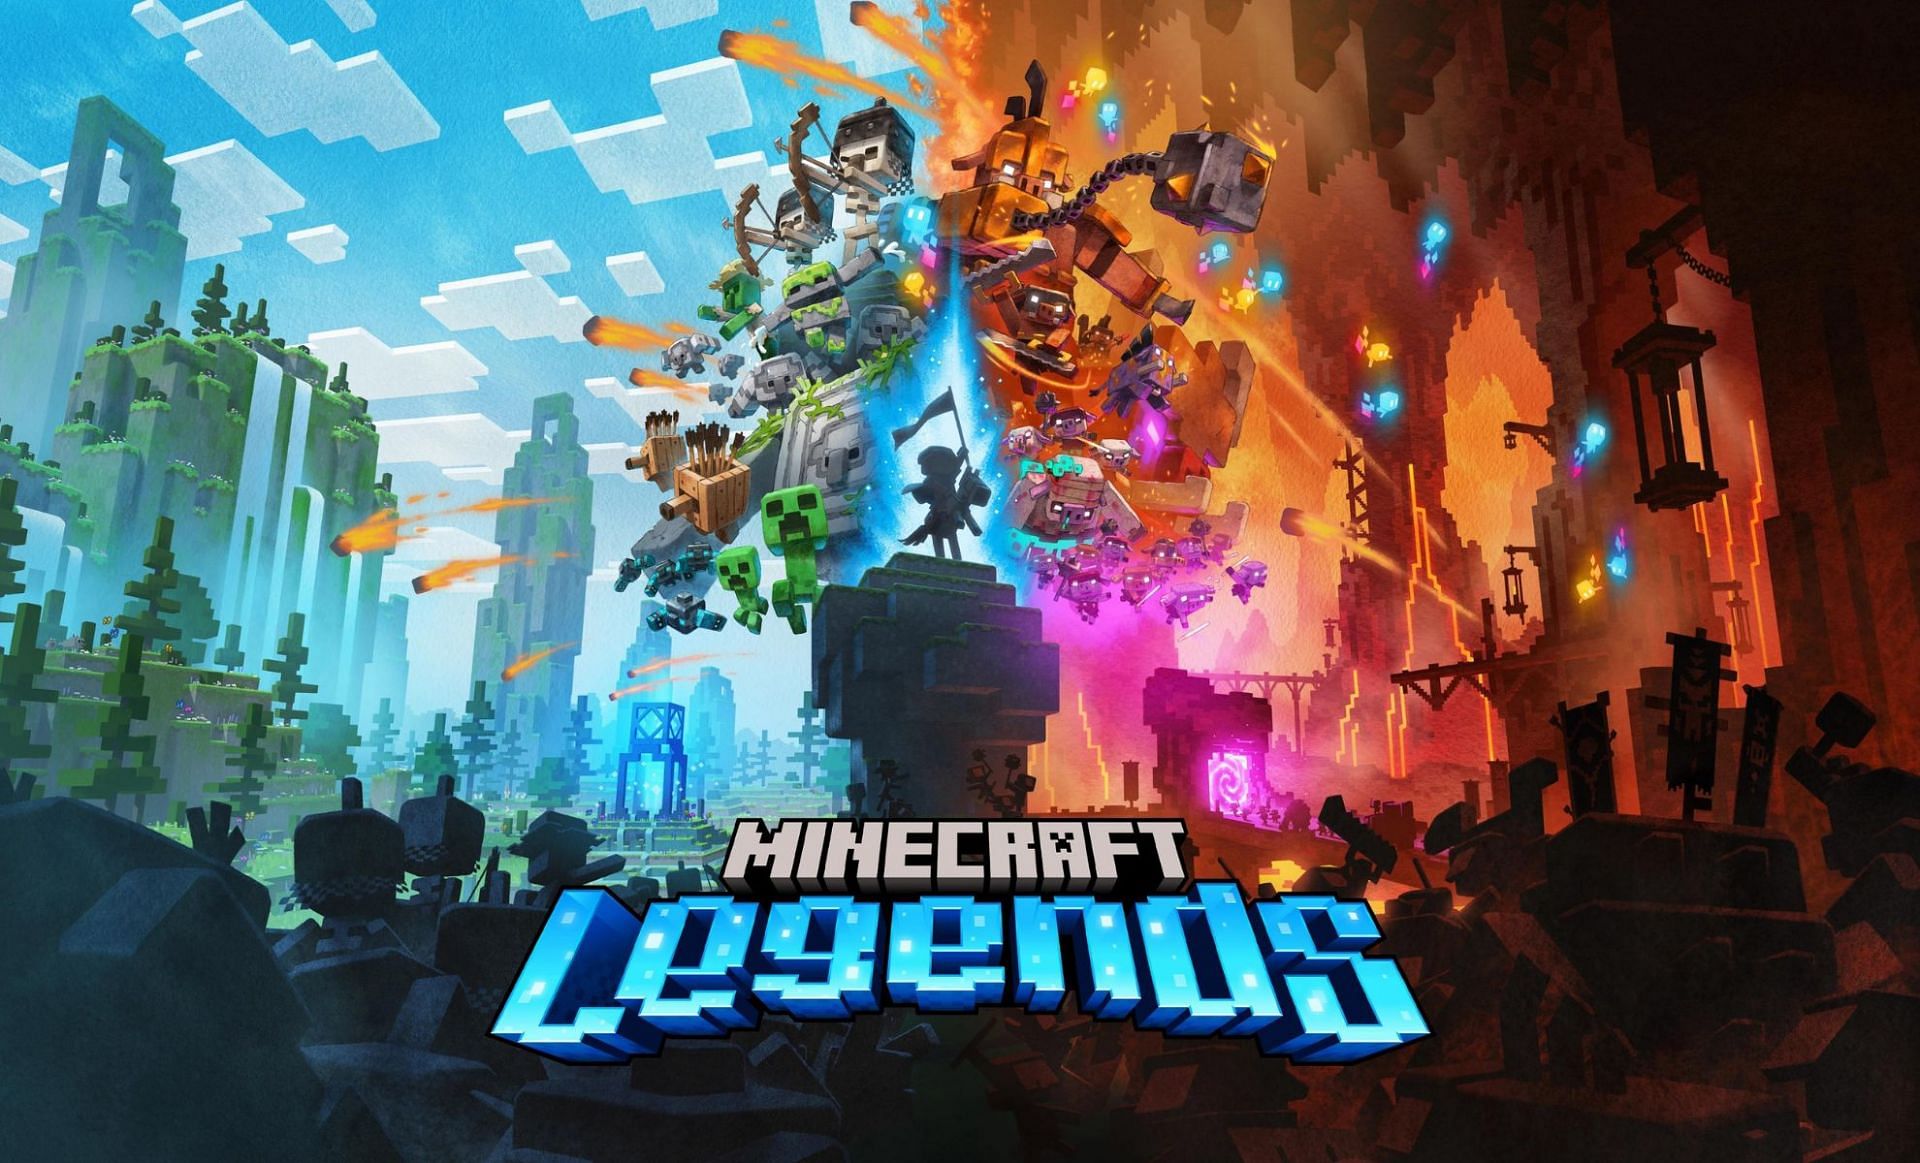 Mojang reveals new Minecraft Legends trailer